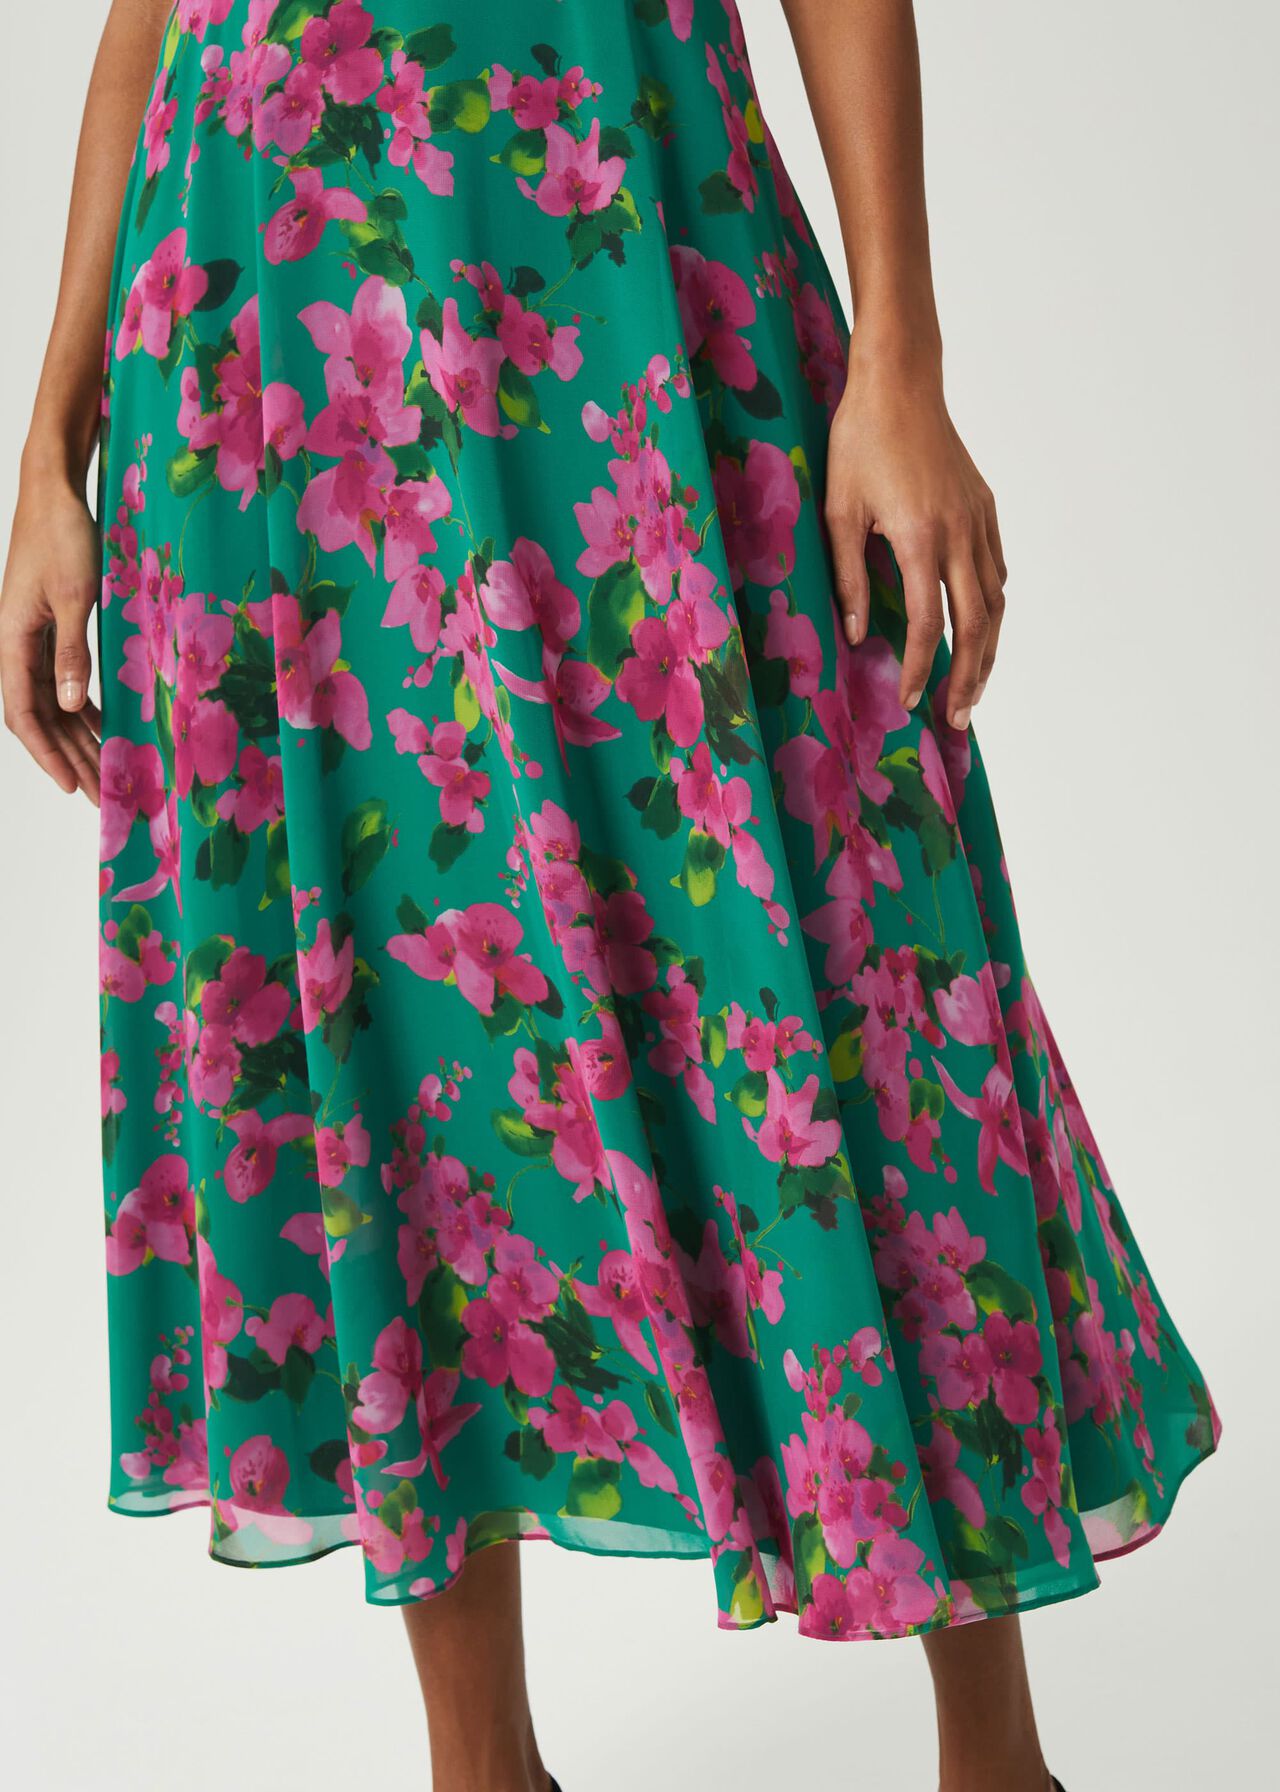 Carly Floral Midi Dress, Fld Grn Fschia, hi-res